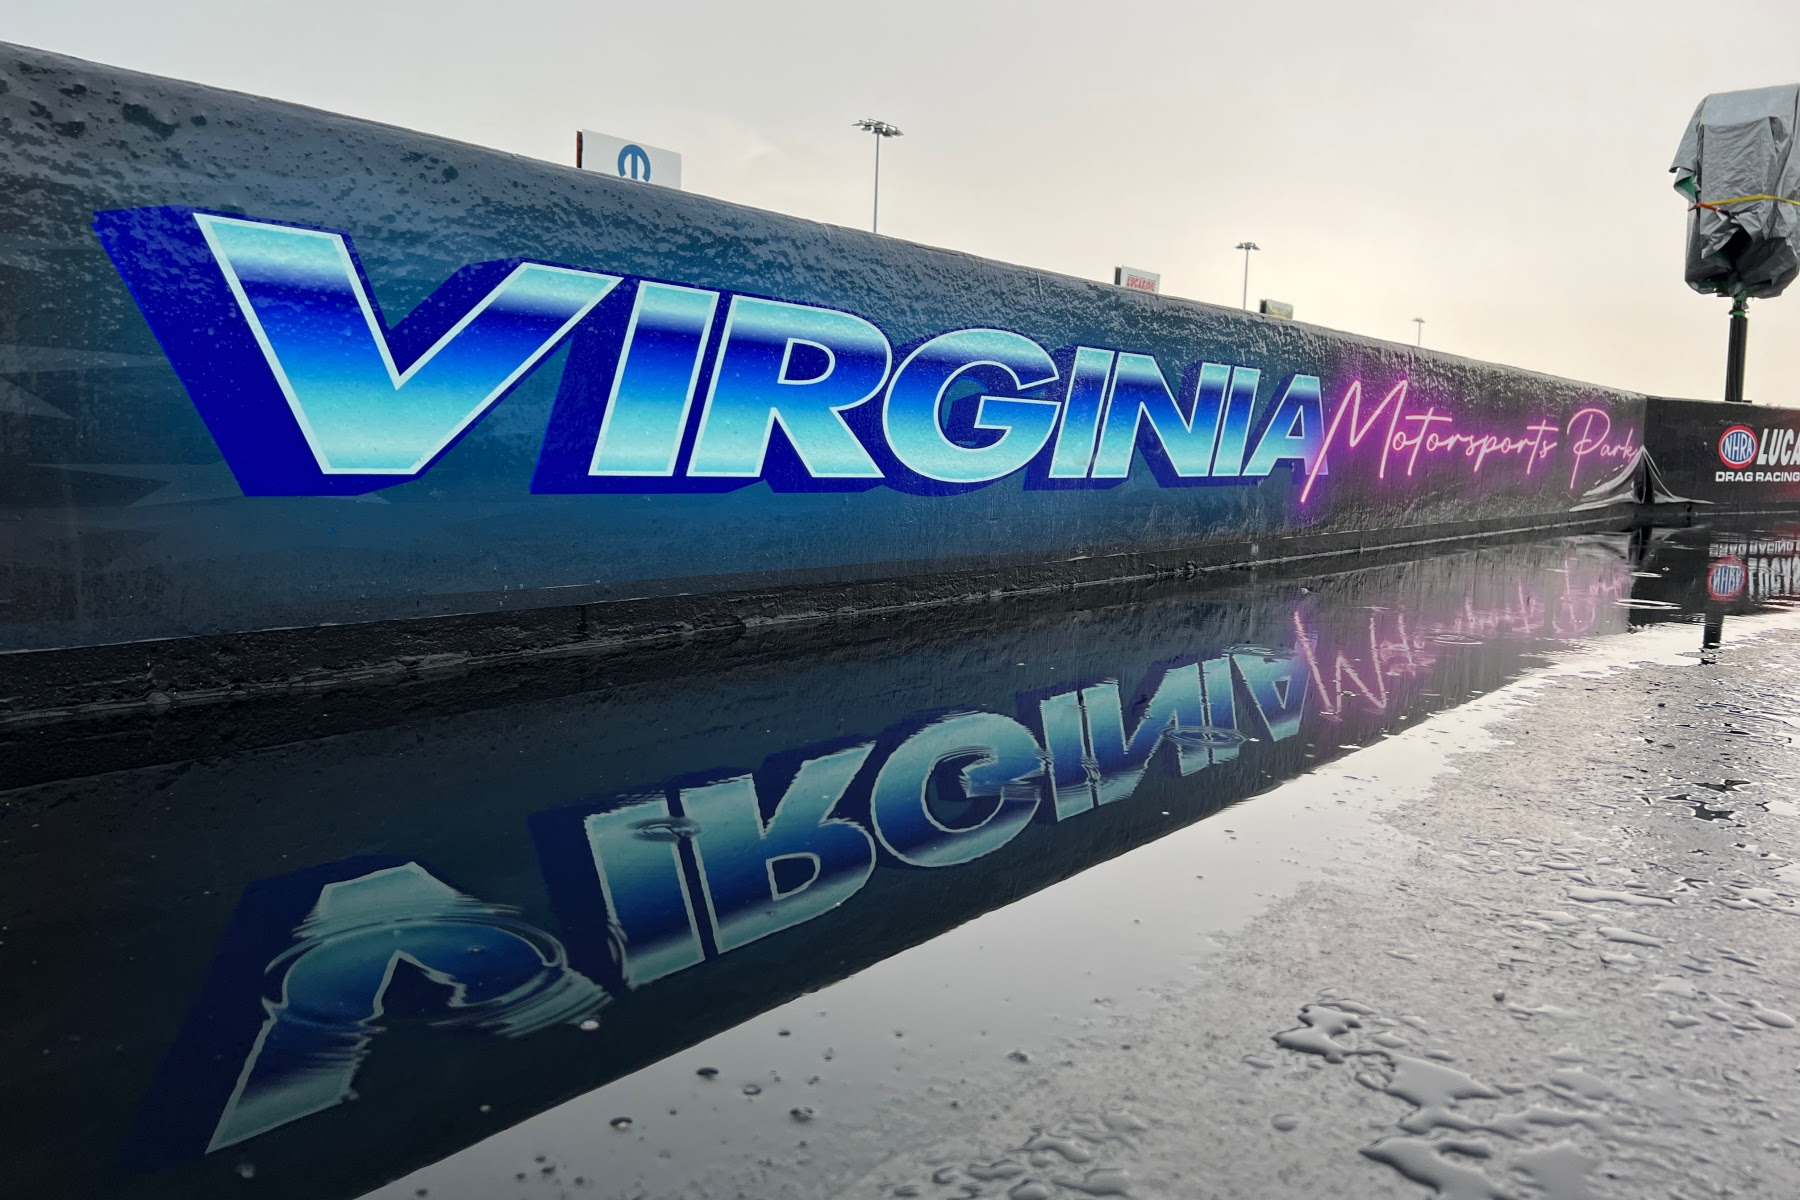 Rain at Virginia Motorsports Park